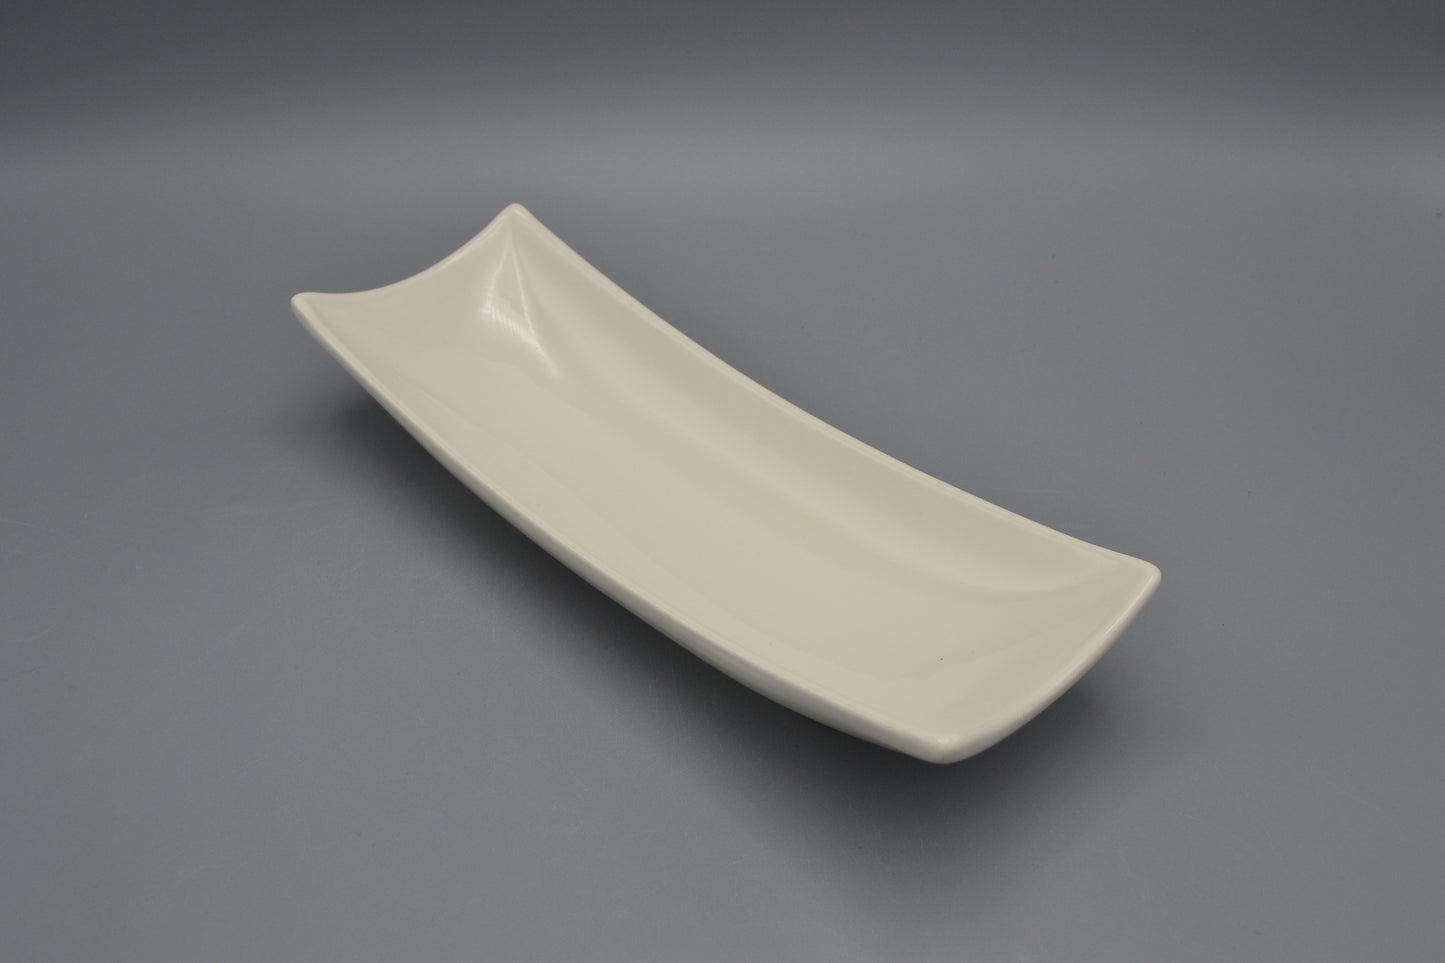 Vaschetta rettangolare in ceramica LUCIDA cristallinata